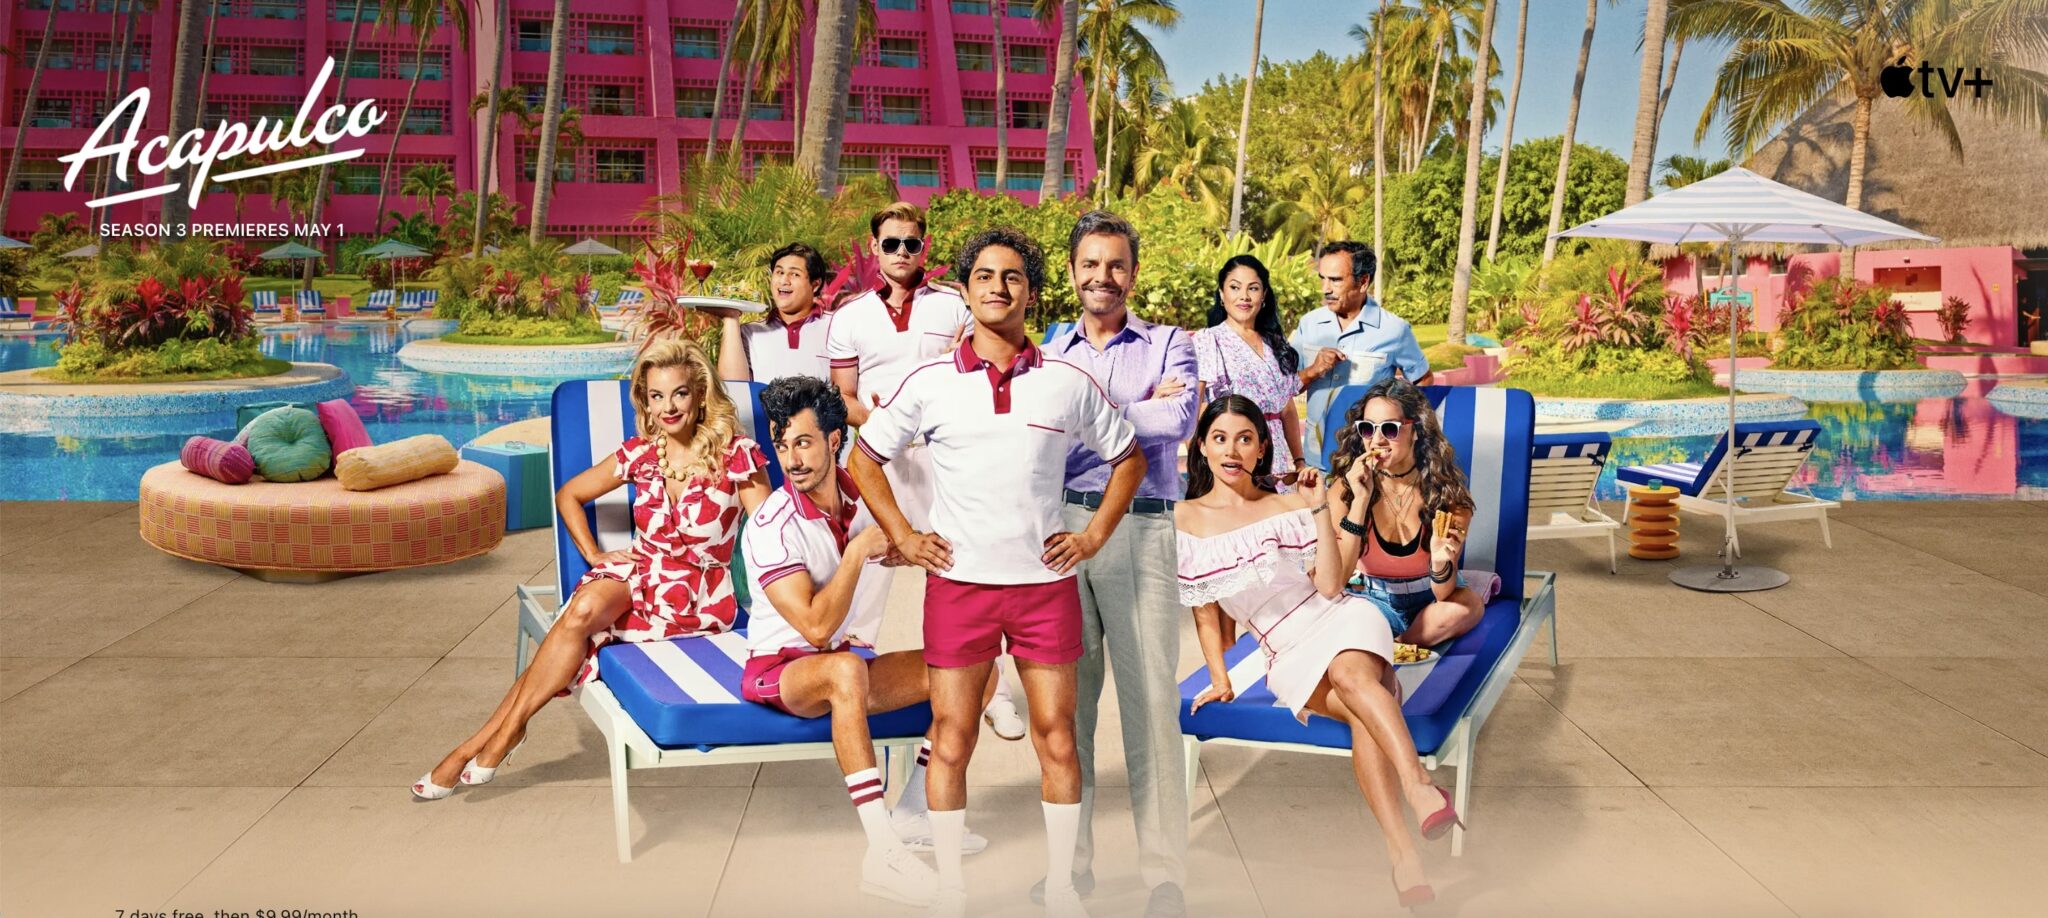 Acapulco Apple TV show season 3